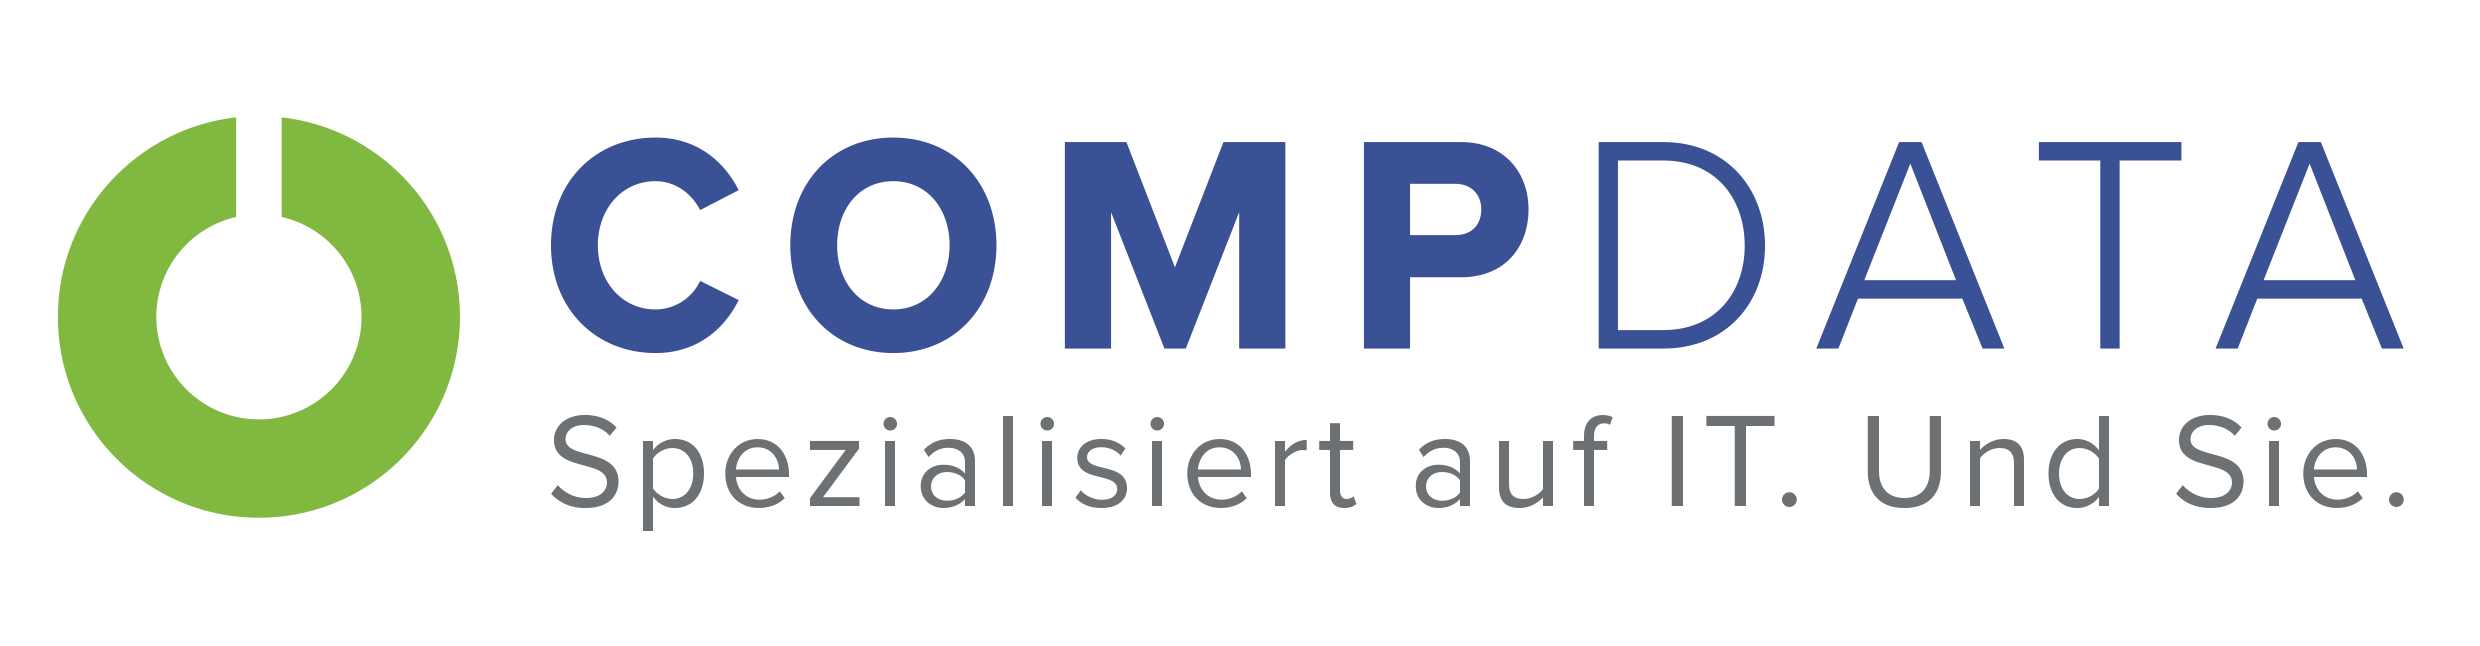 Compdata_Logo